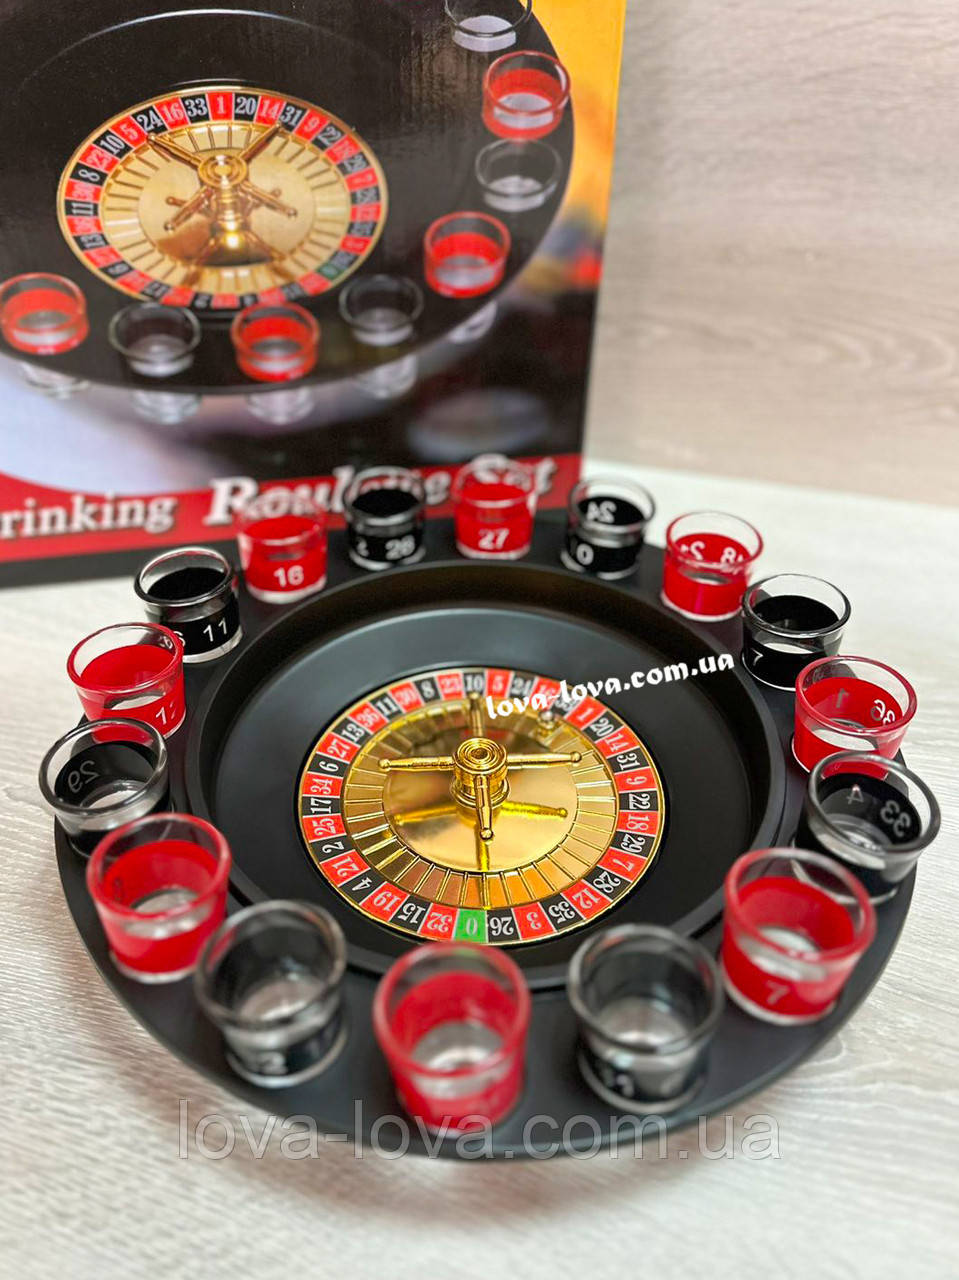 Алкогольна настільна гра "П'яна рулетка" на 16 скляних чарок